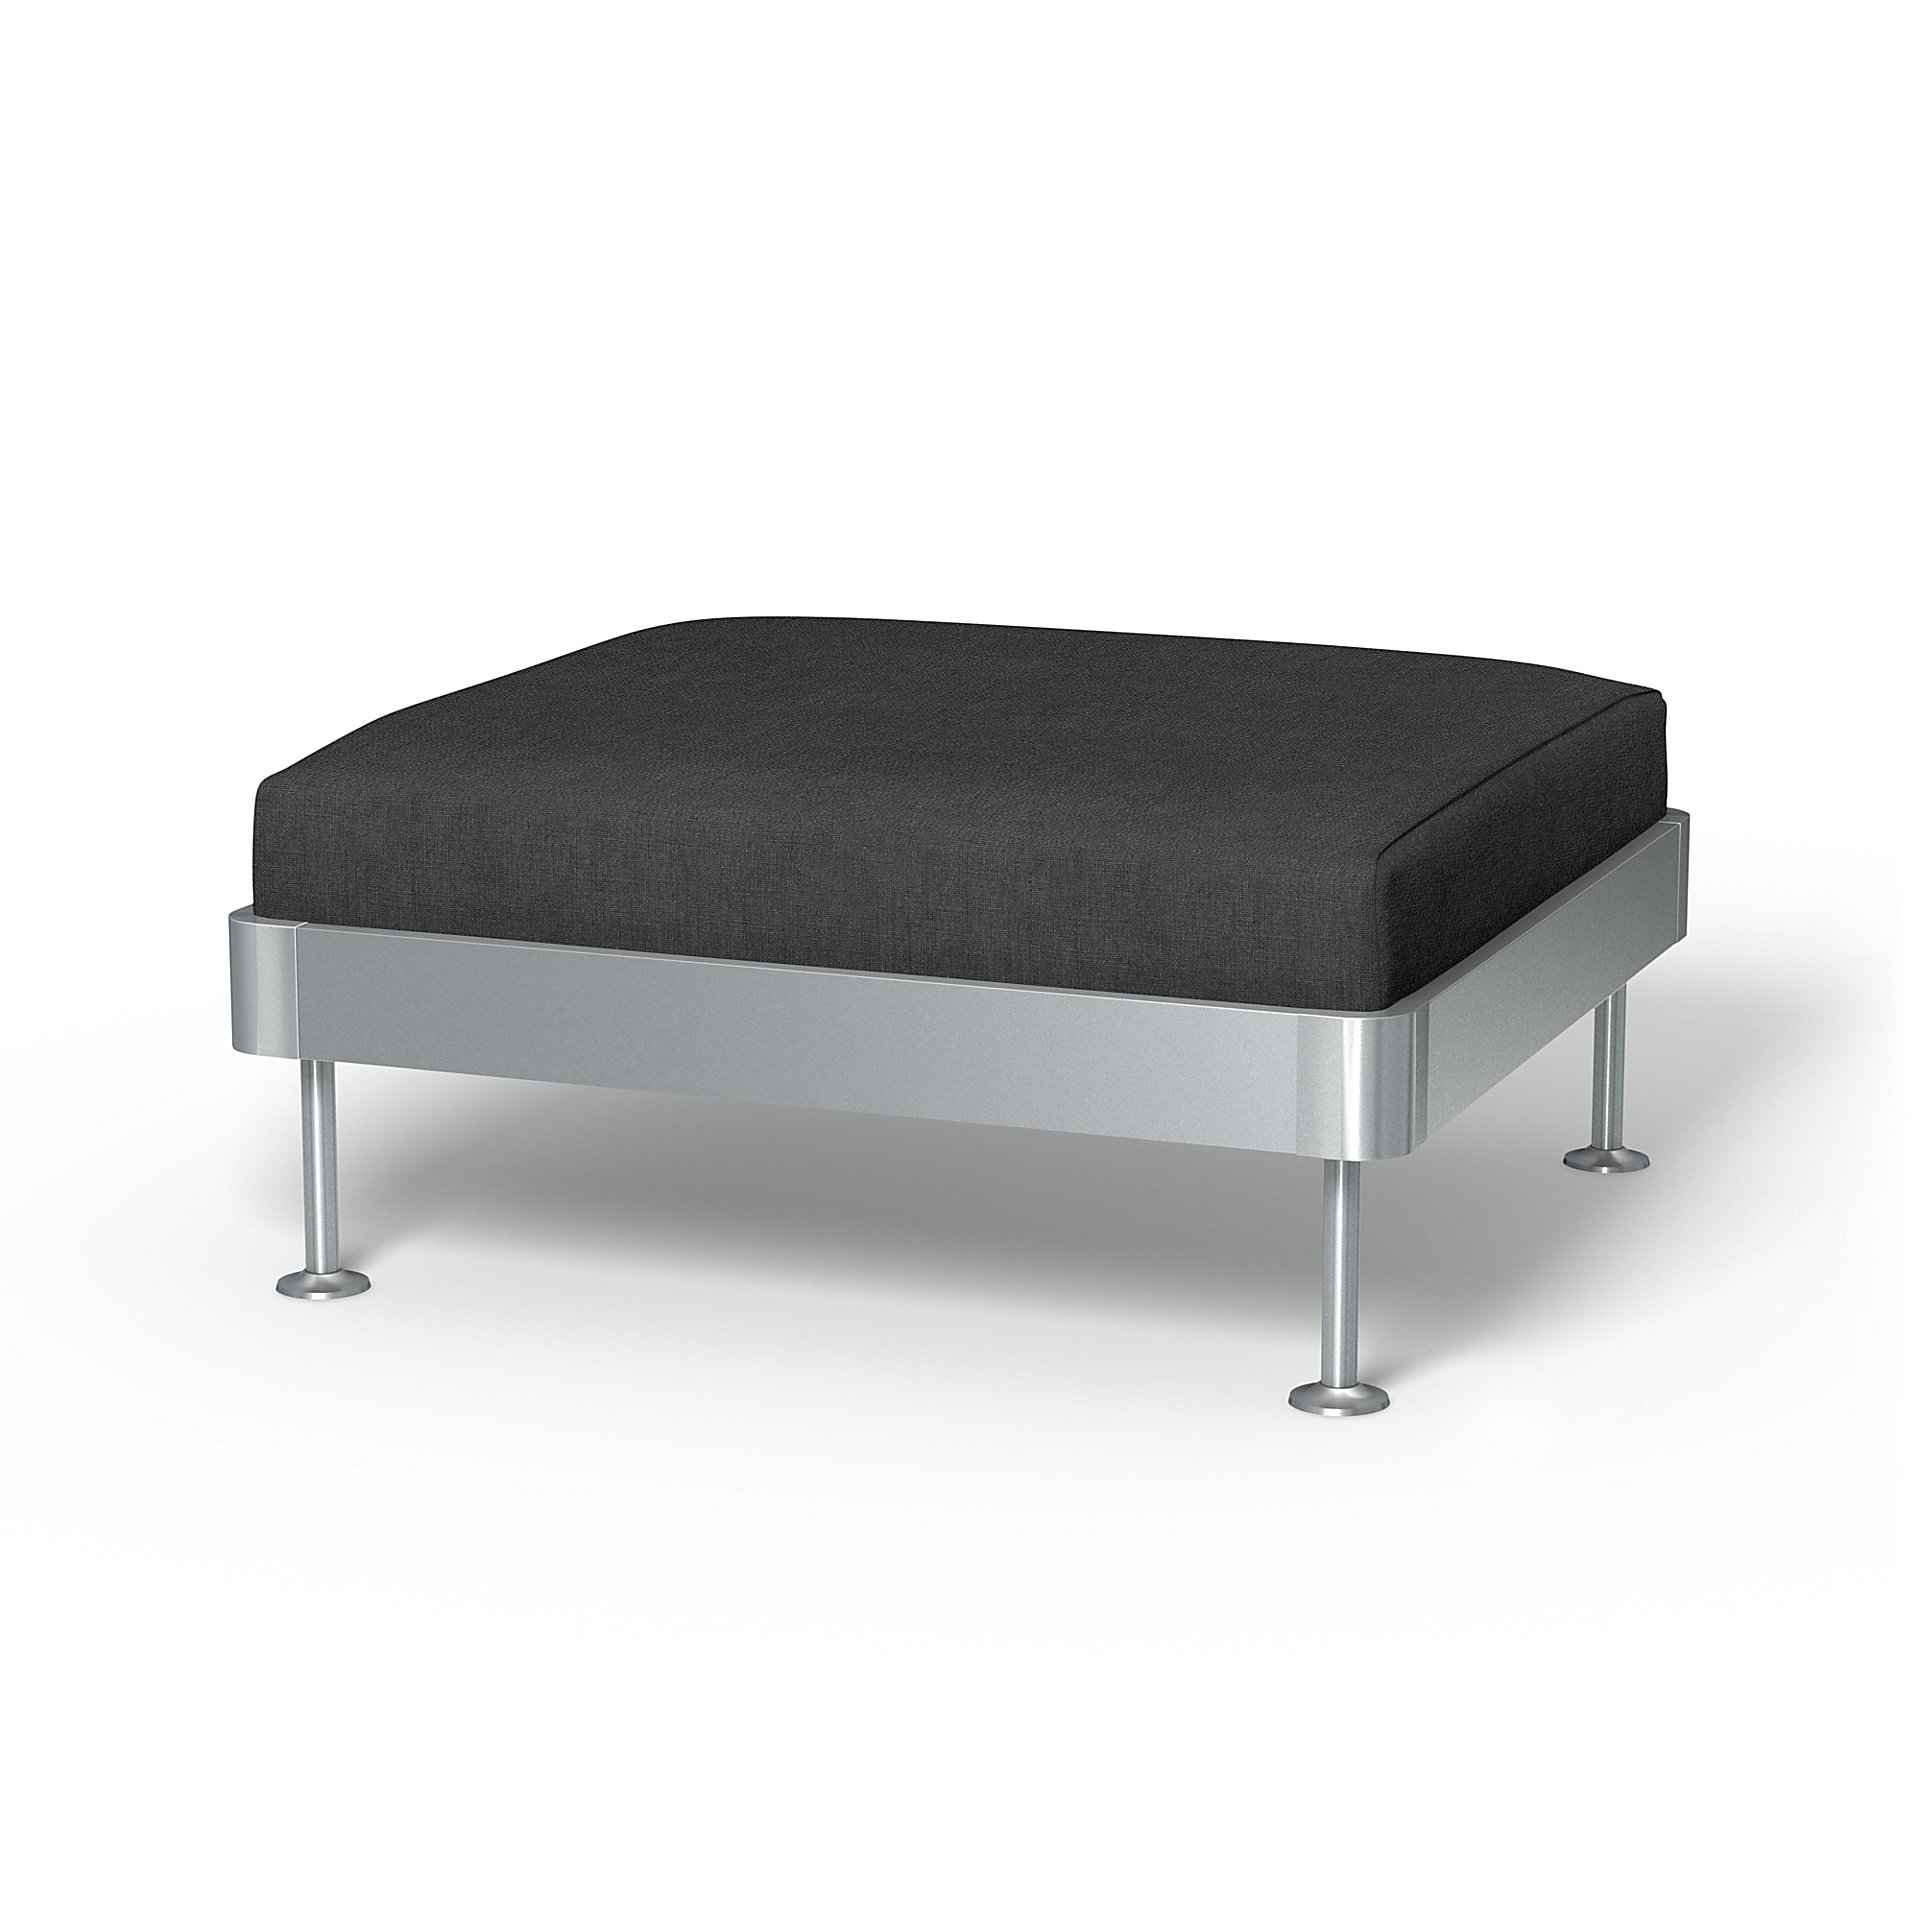 IKEA - Delaktig 1 Seat Platform Cover, Espresso, Linen - Bemz